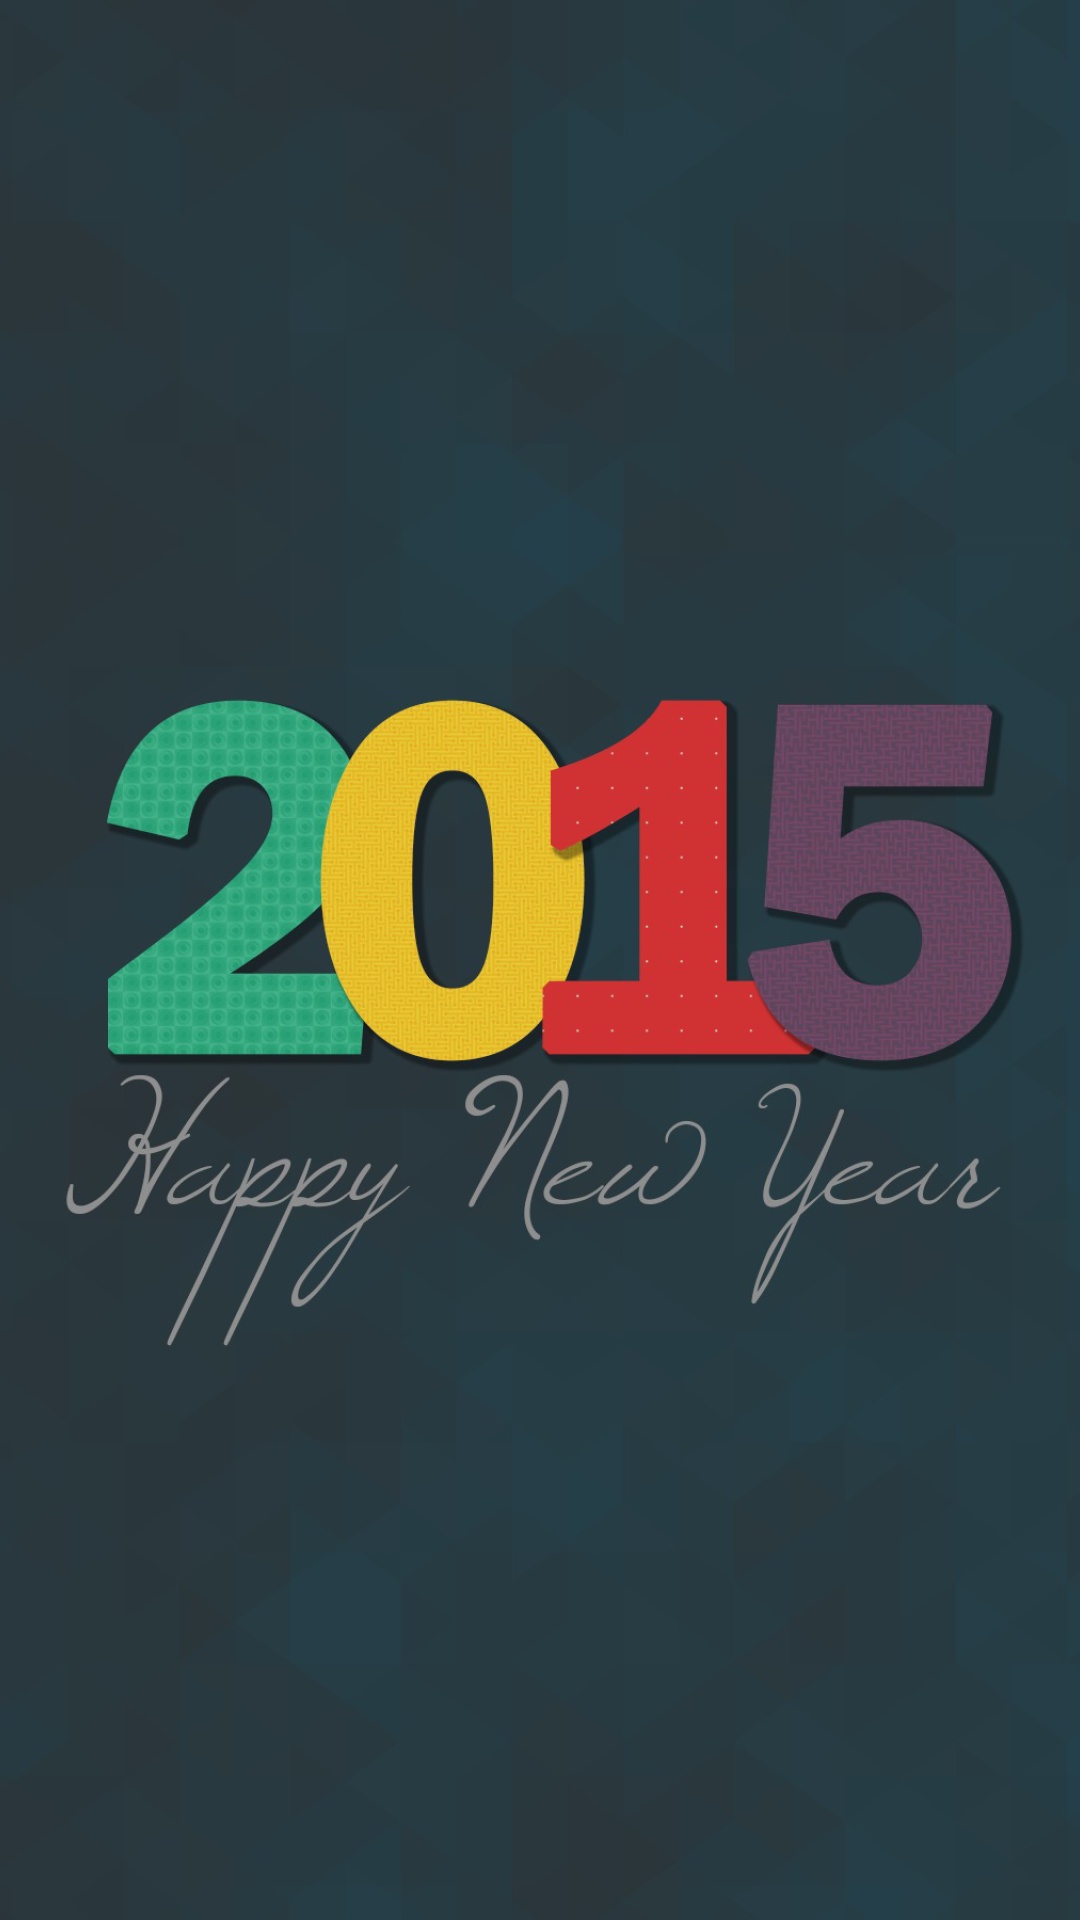 Happy New Year 2015 wallpaper 1080x1920